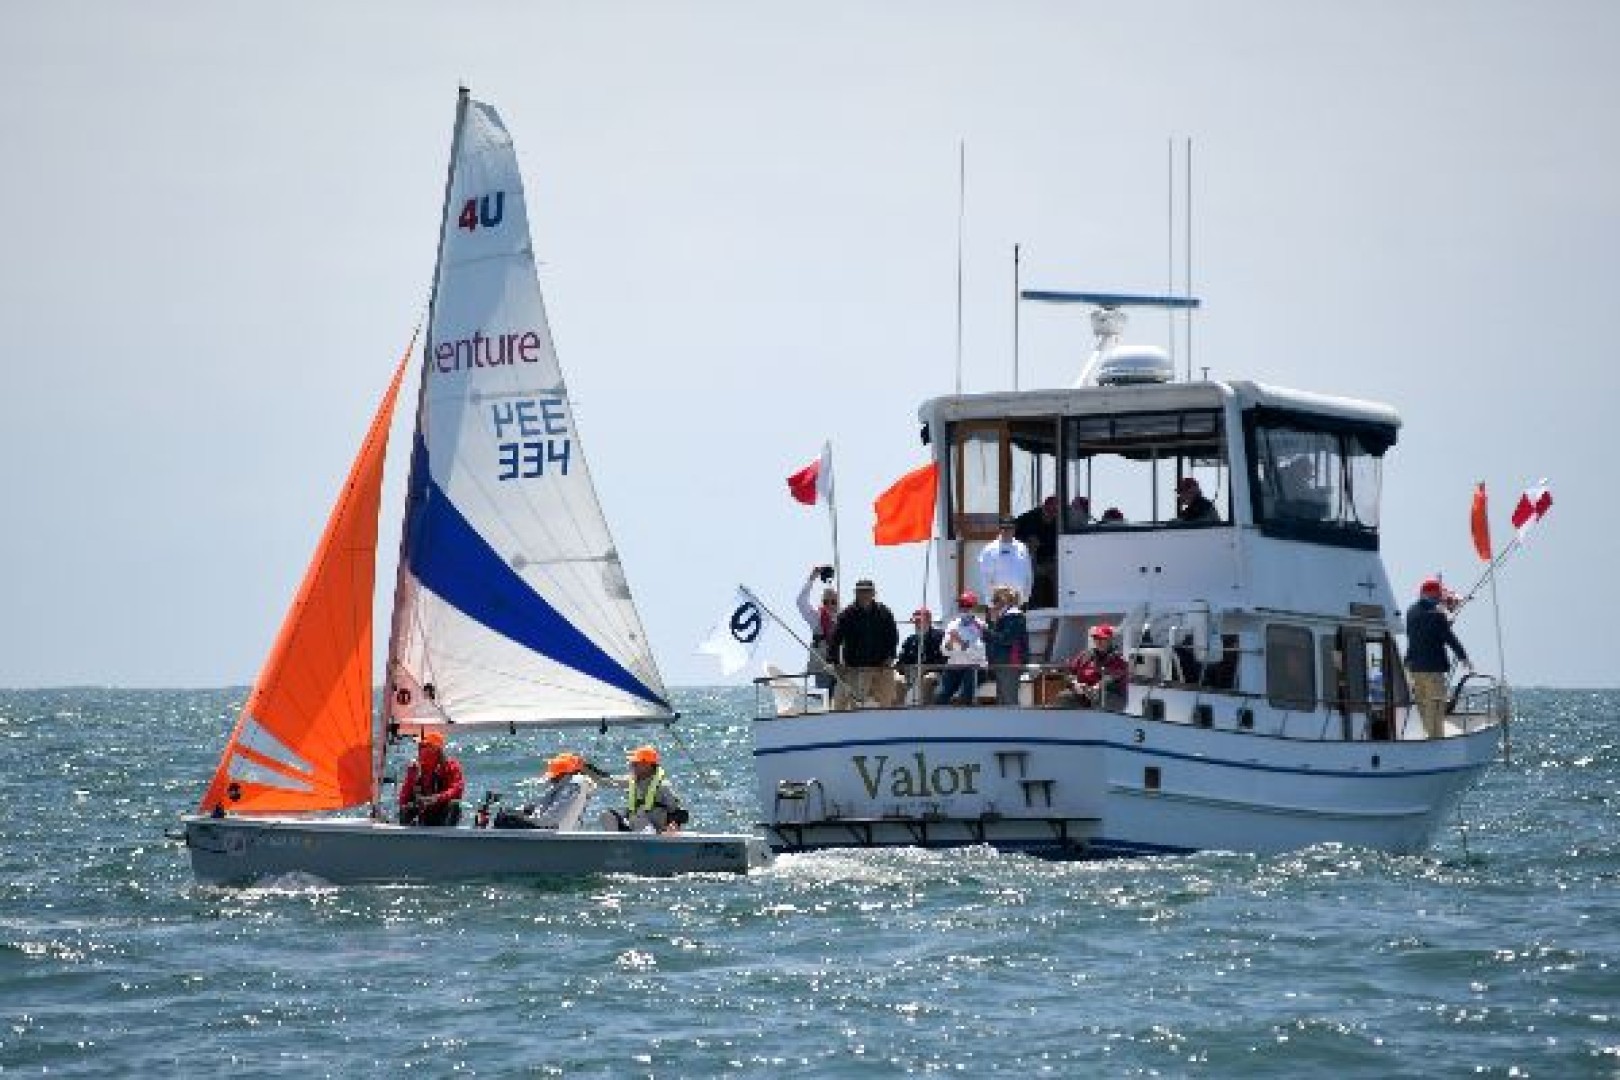 California Inclusive Sailing's 4U will return to the Dana Point course at N2E 74